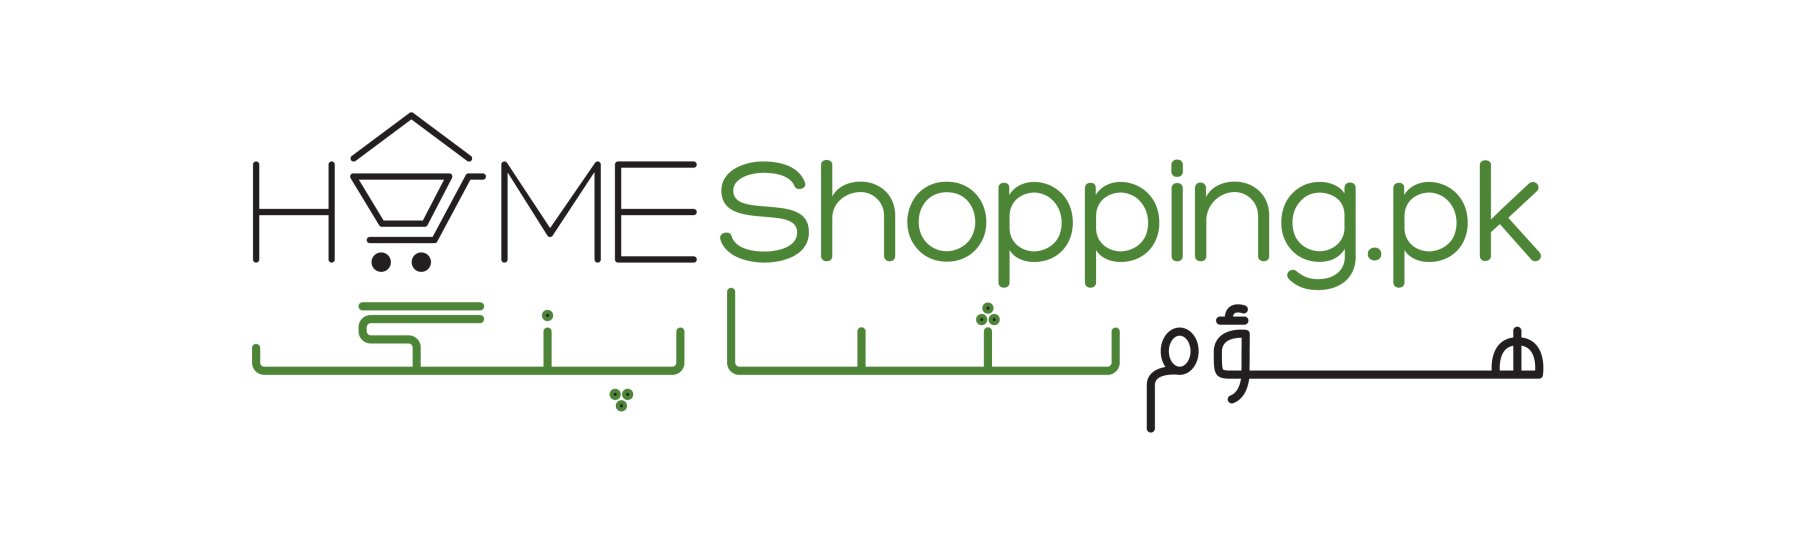 HomeShopping to rebrand; Here's the new logo